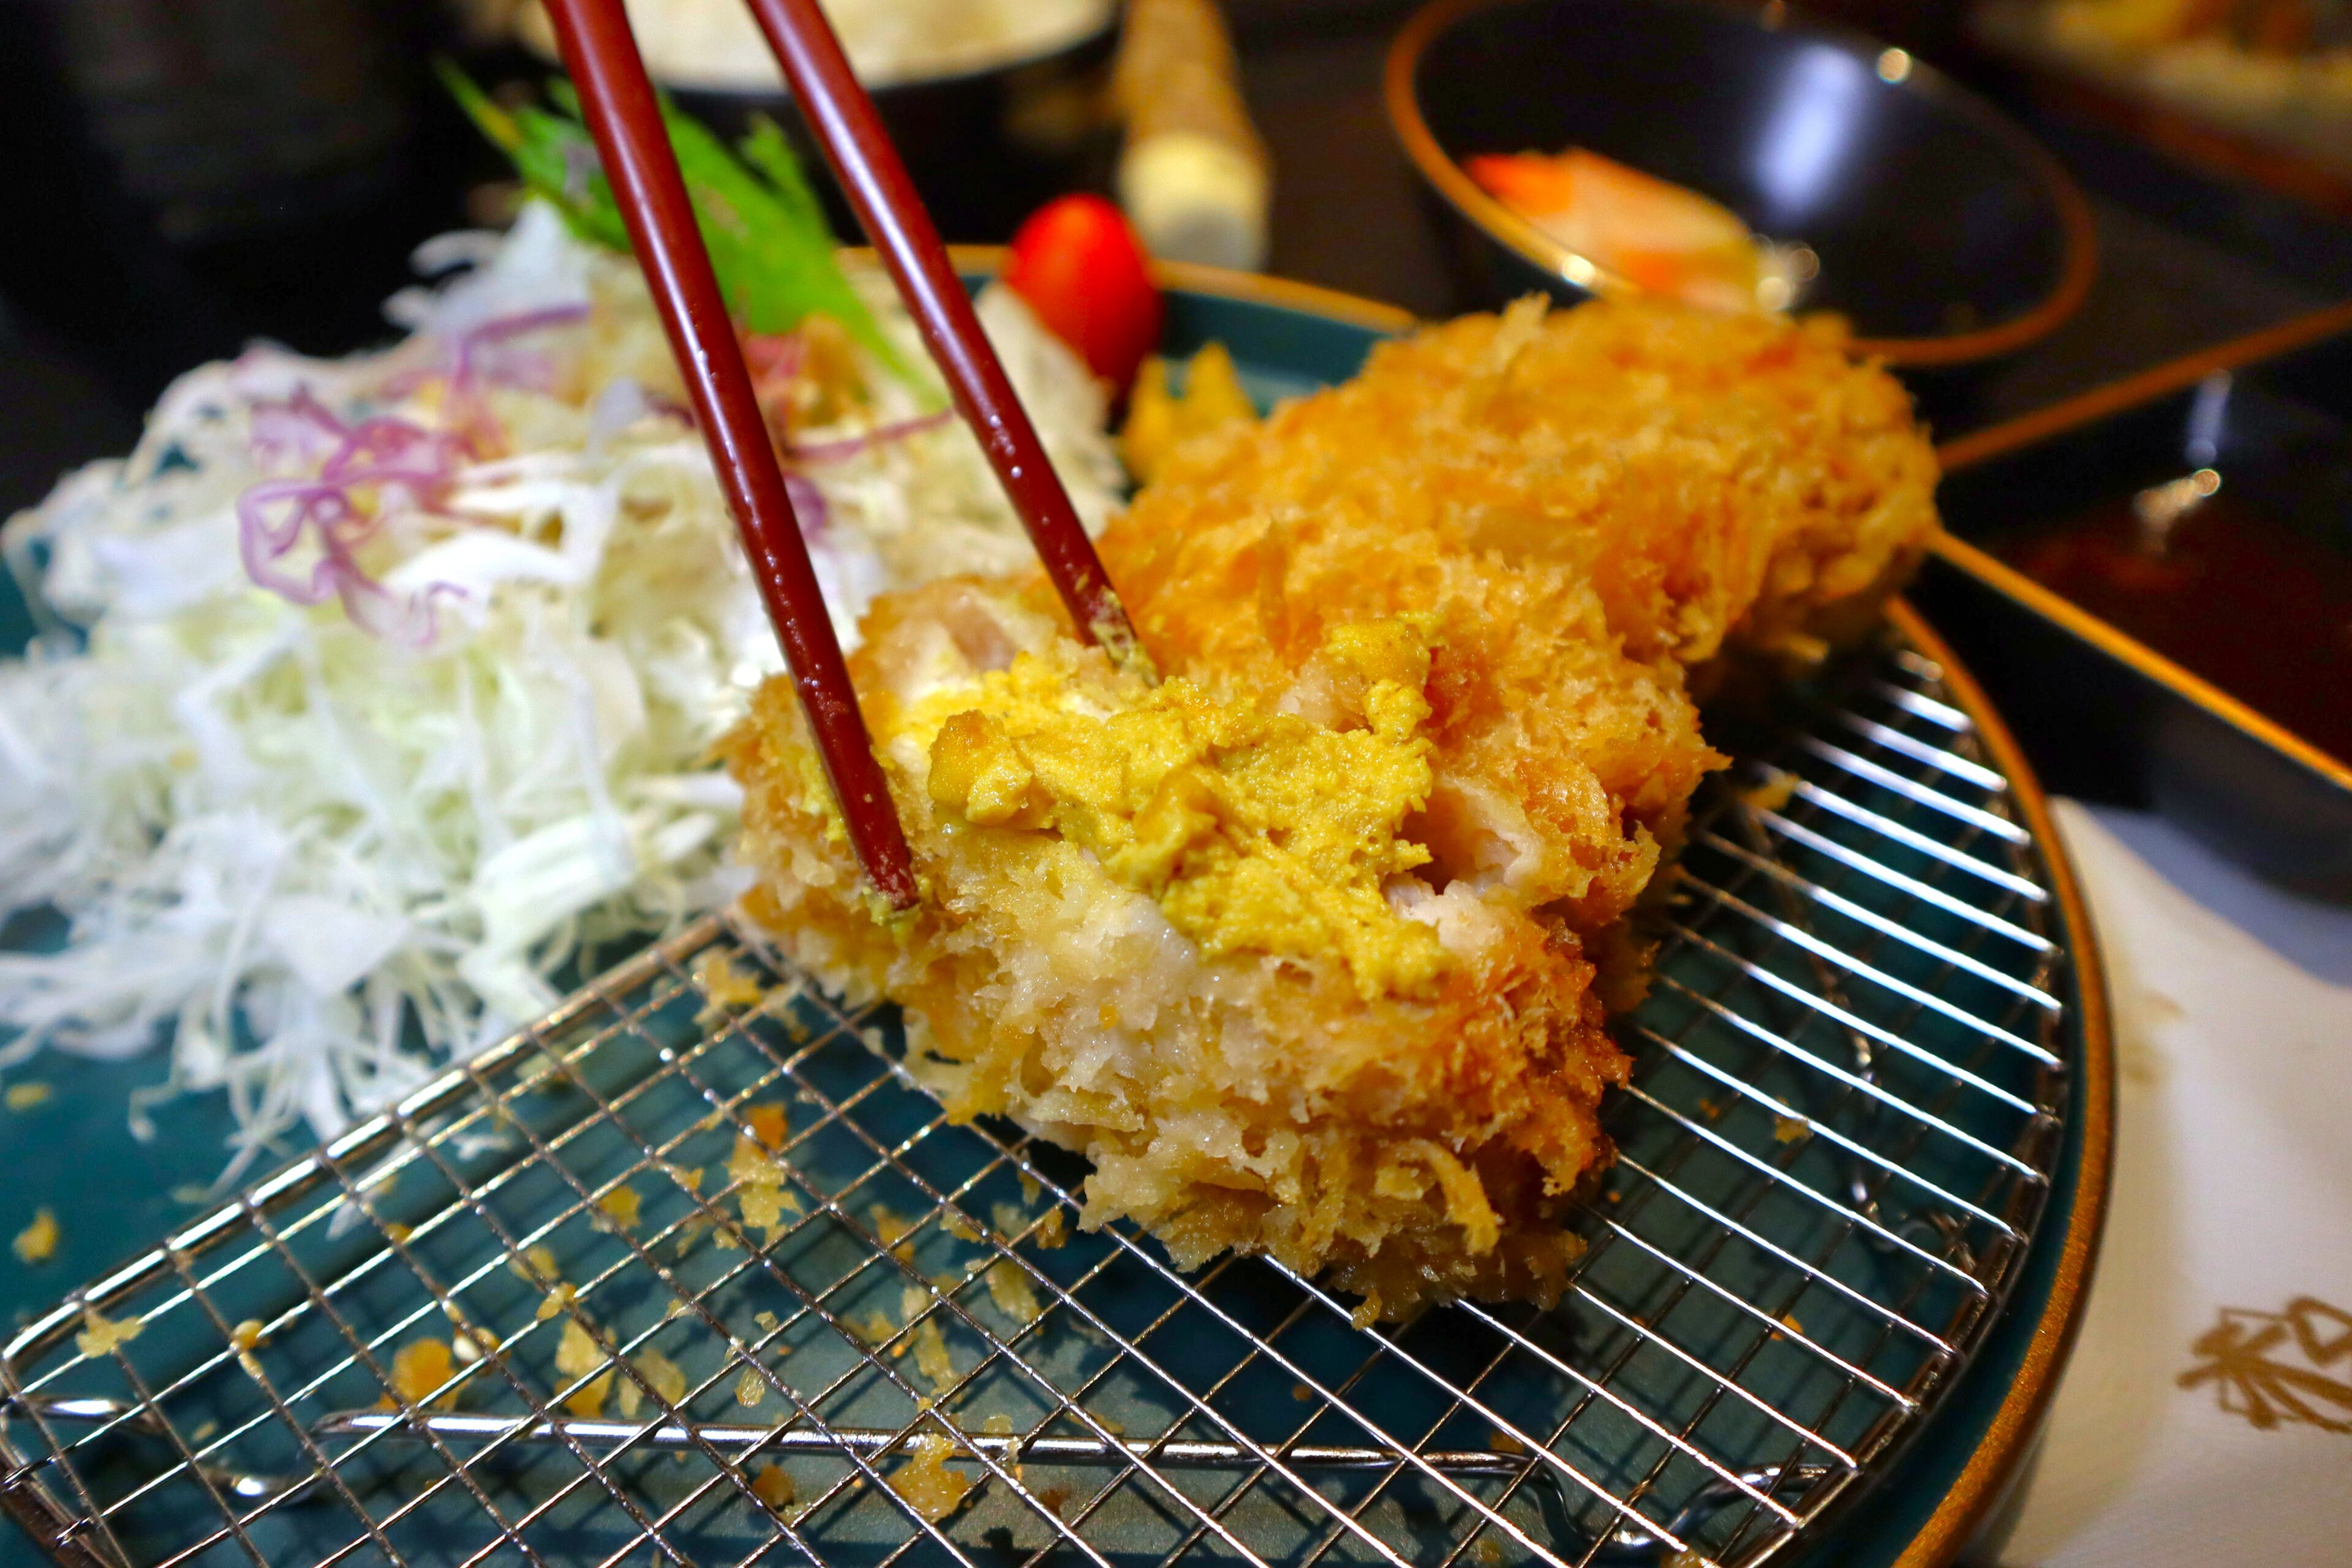 itacho tonkatsu - pork cutlet with mustard